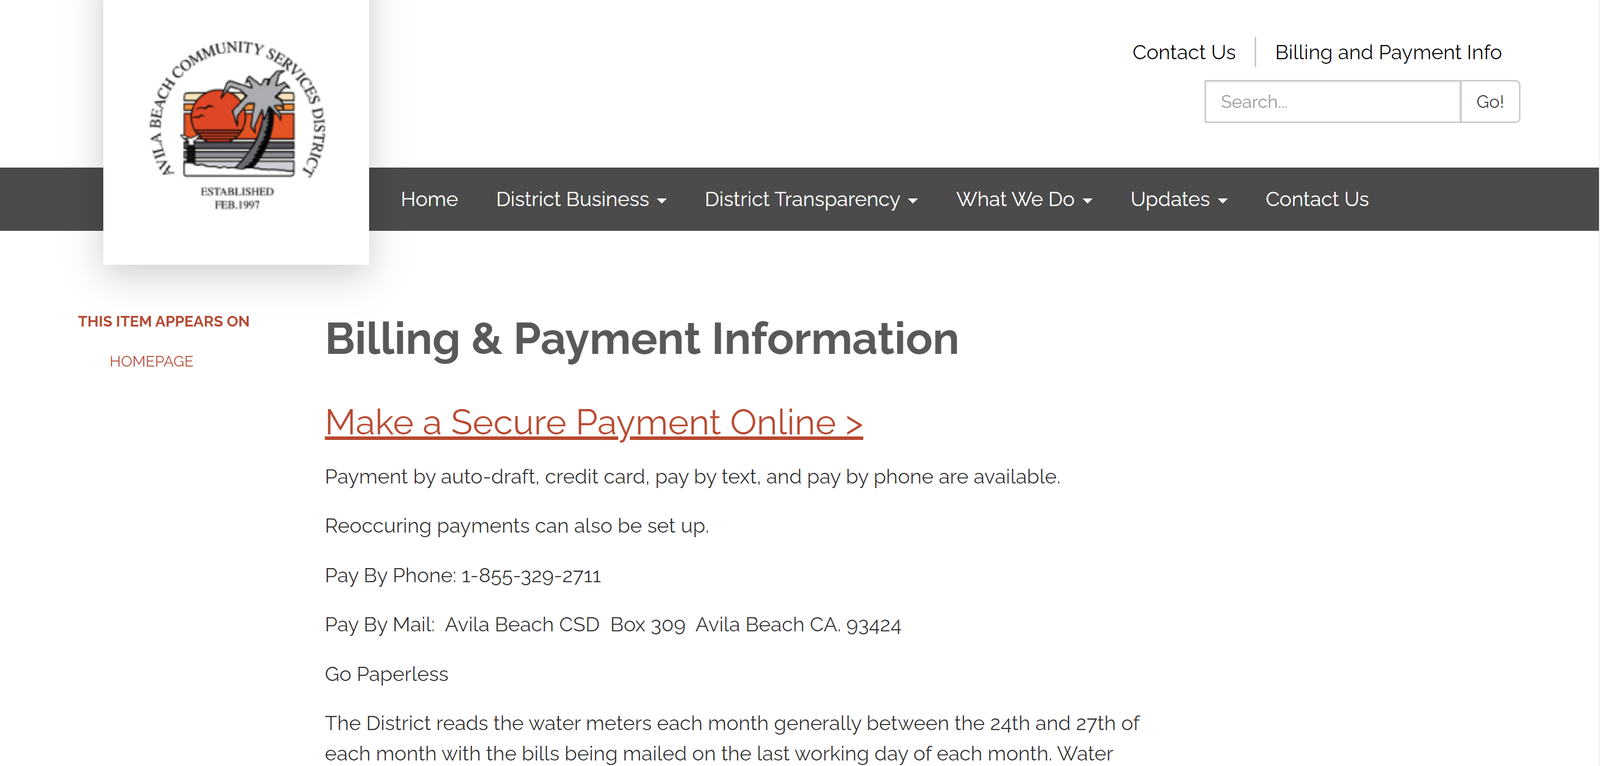 Avila Beach Login, Bill Payment & Customer Support Information